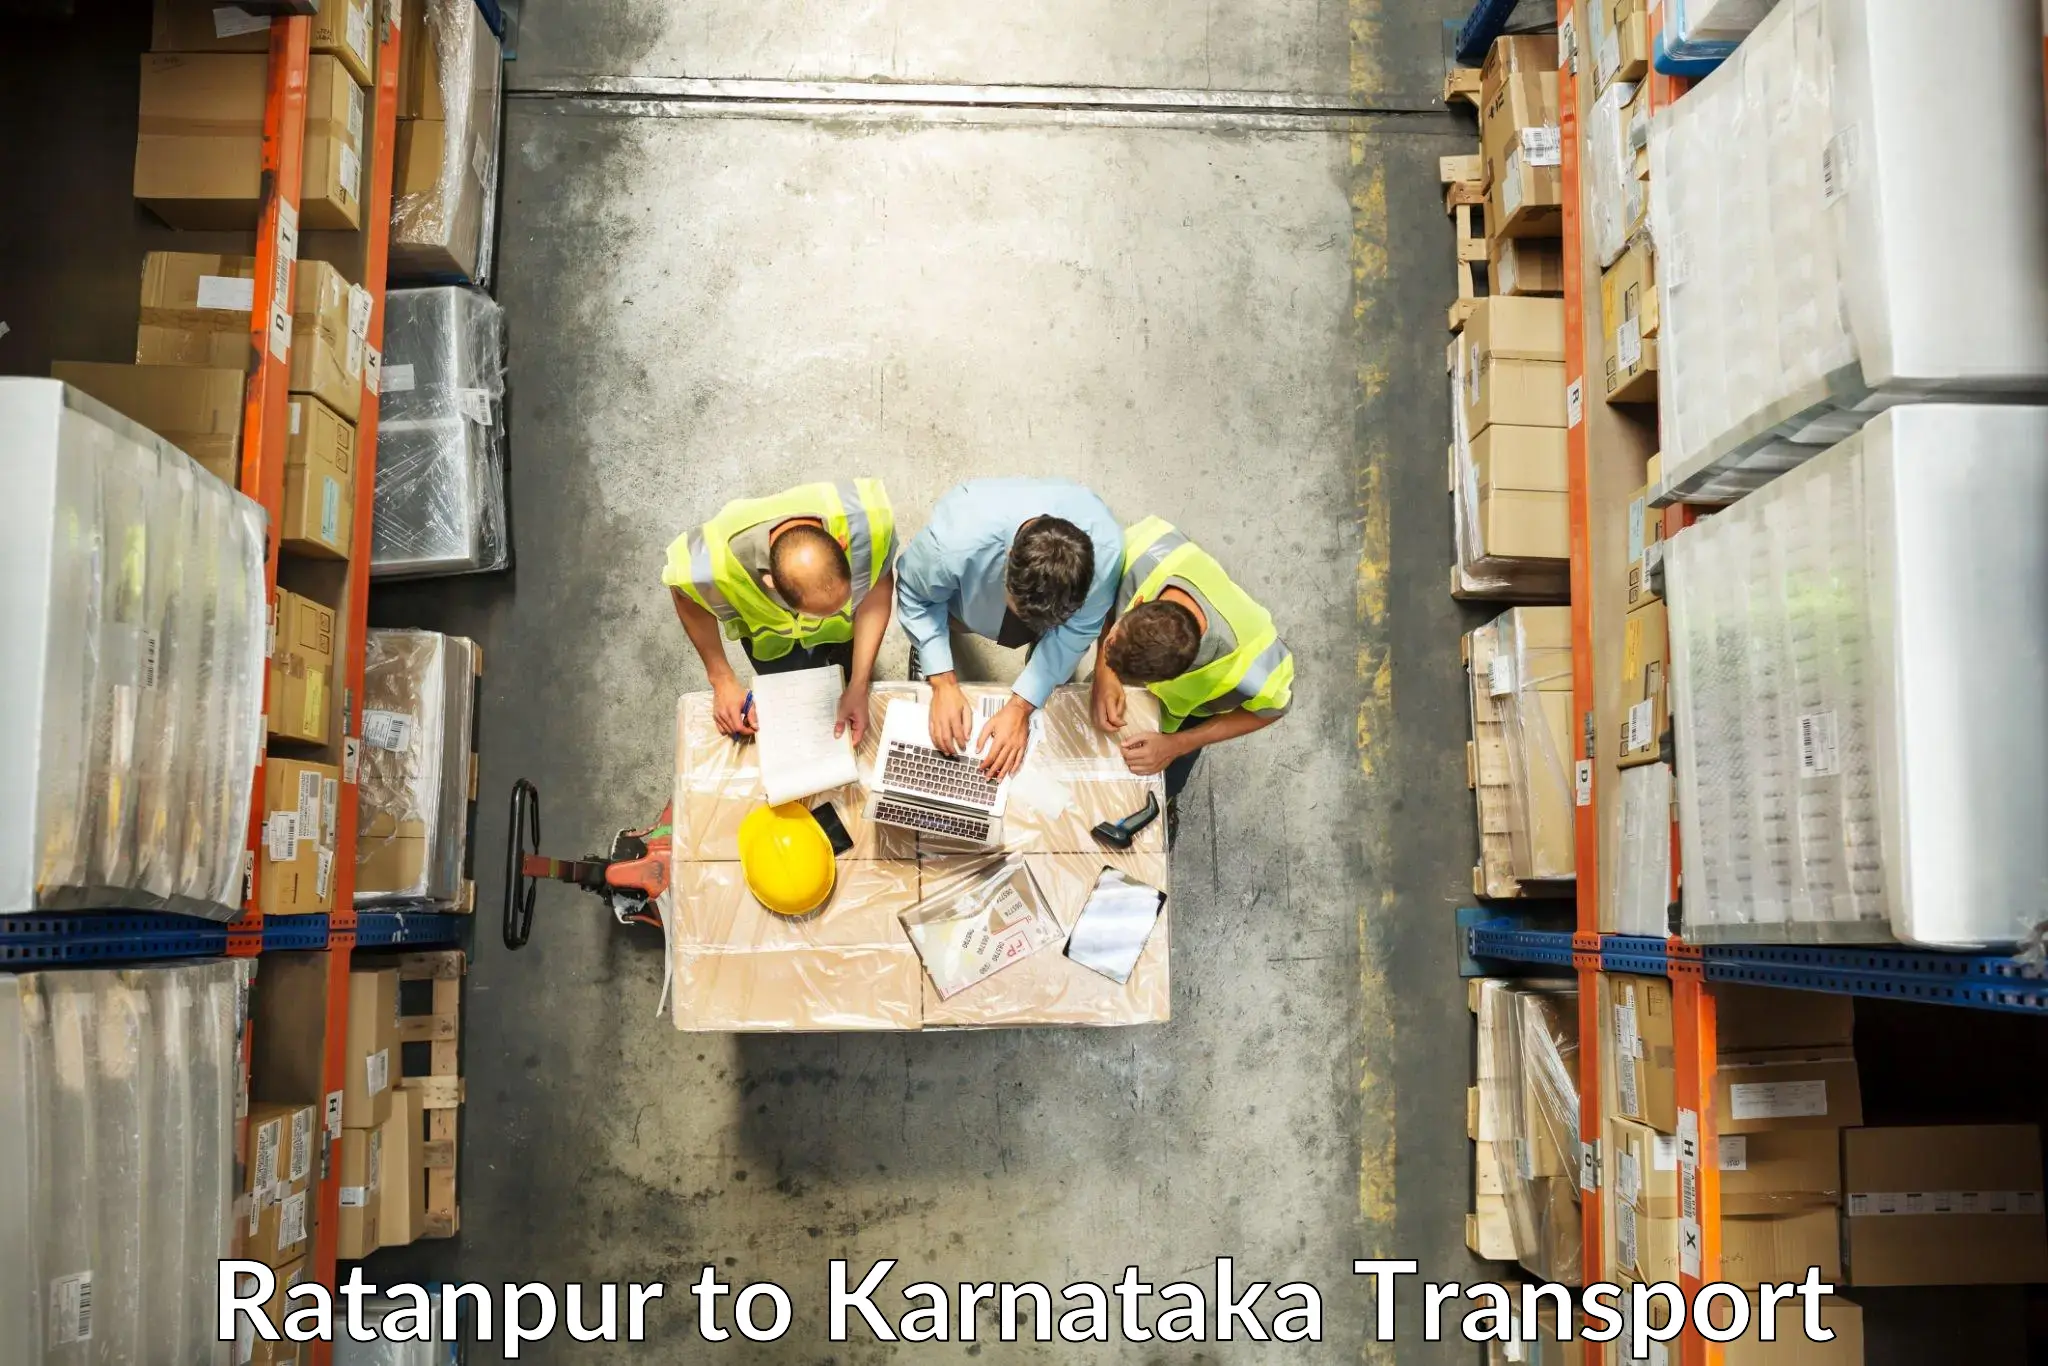 Delivery service Ratanpur to Karnataka